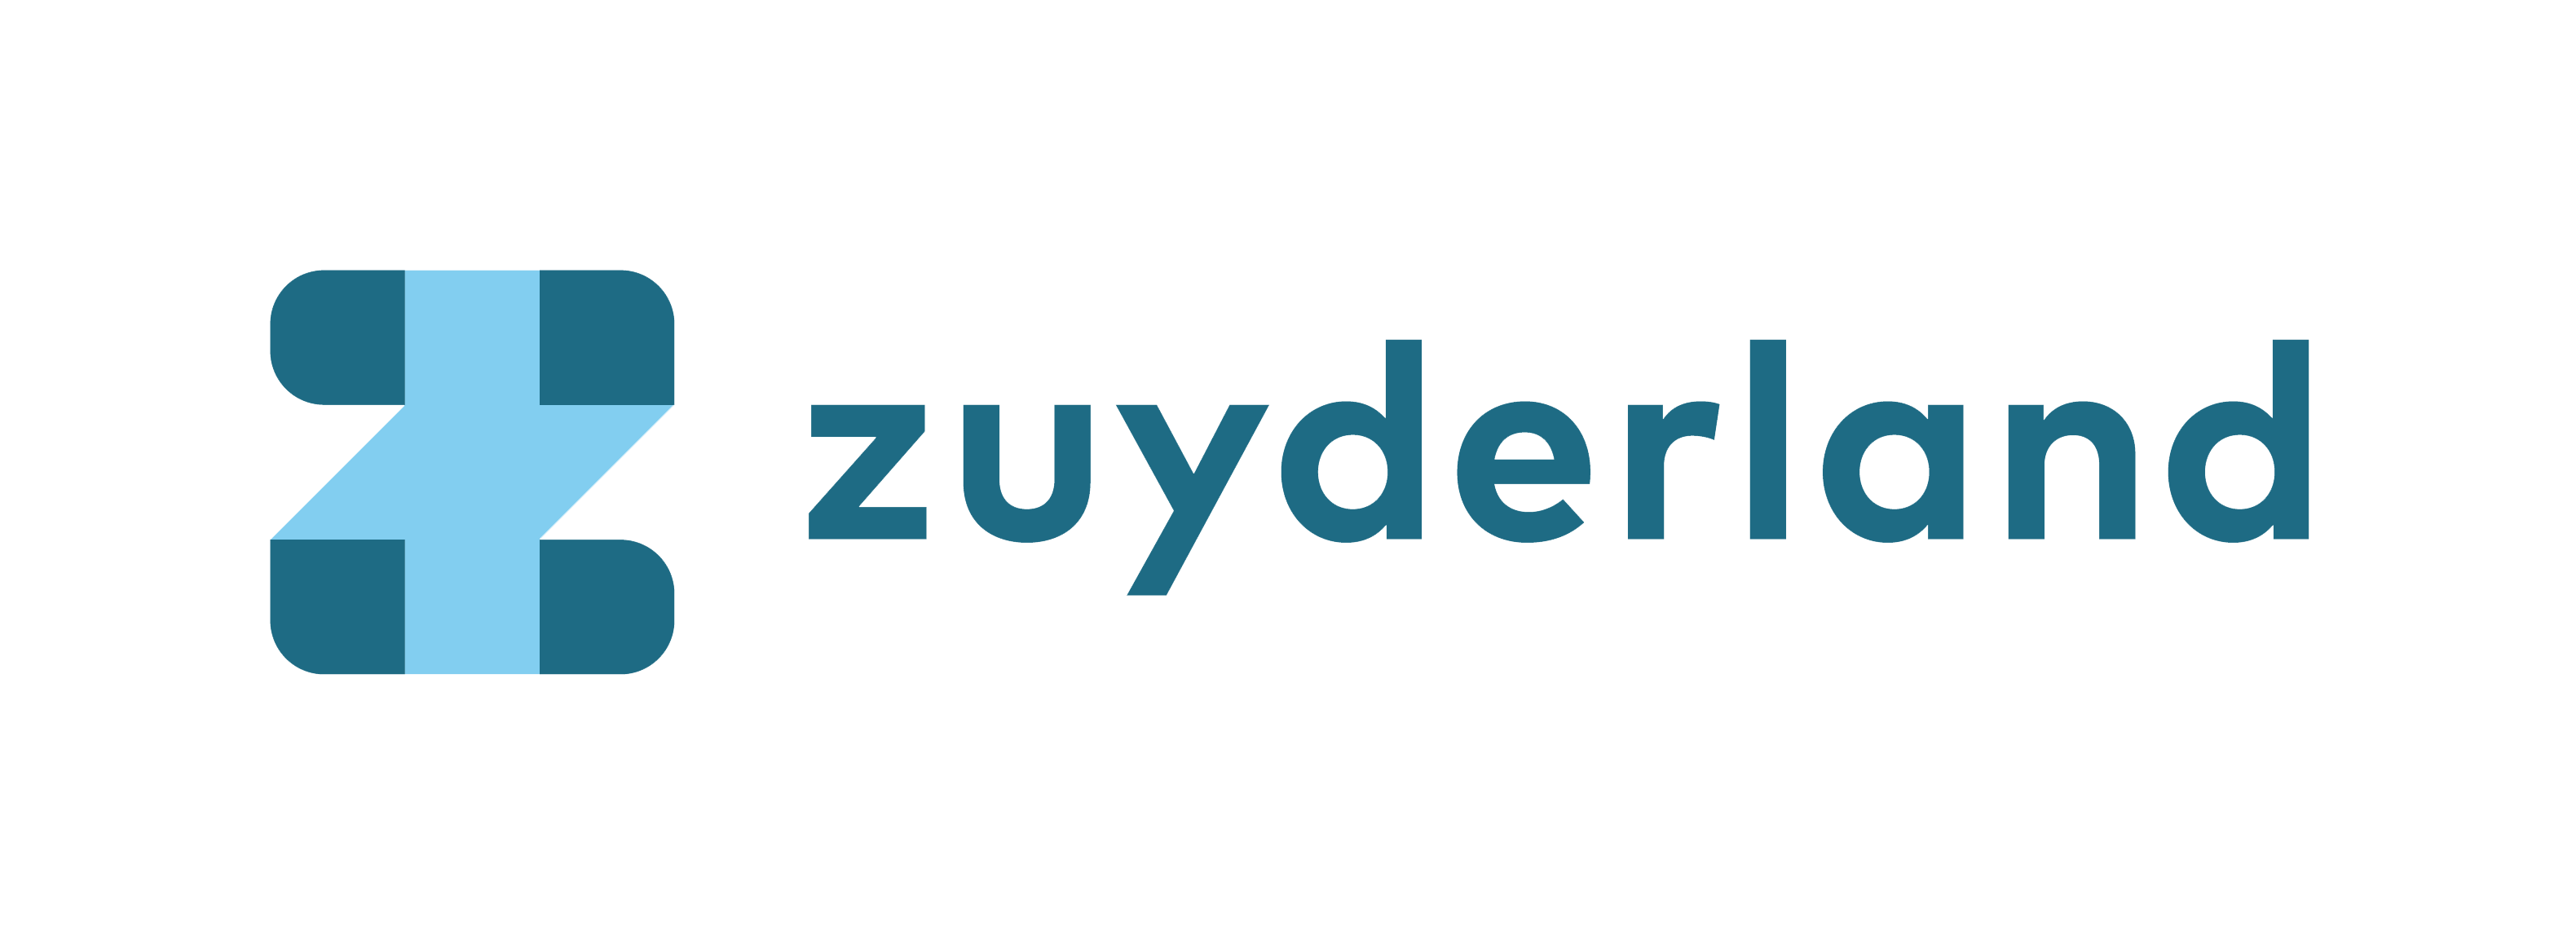 Zuyderland-logo-1